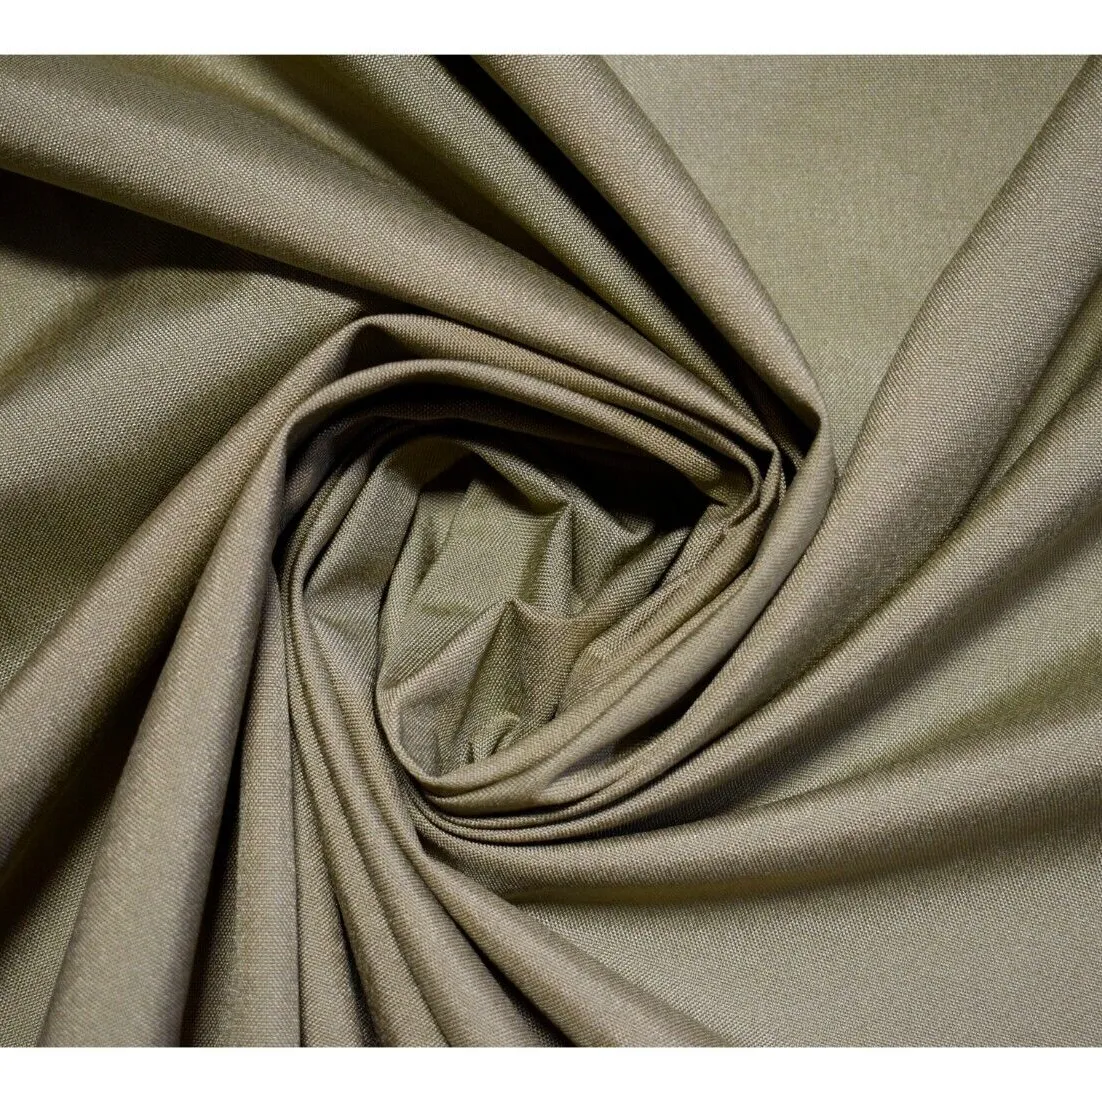 Khaki Cordura Fabric Outdoor Nylon DWR Coated Water Repellent